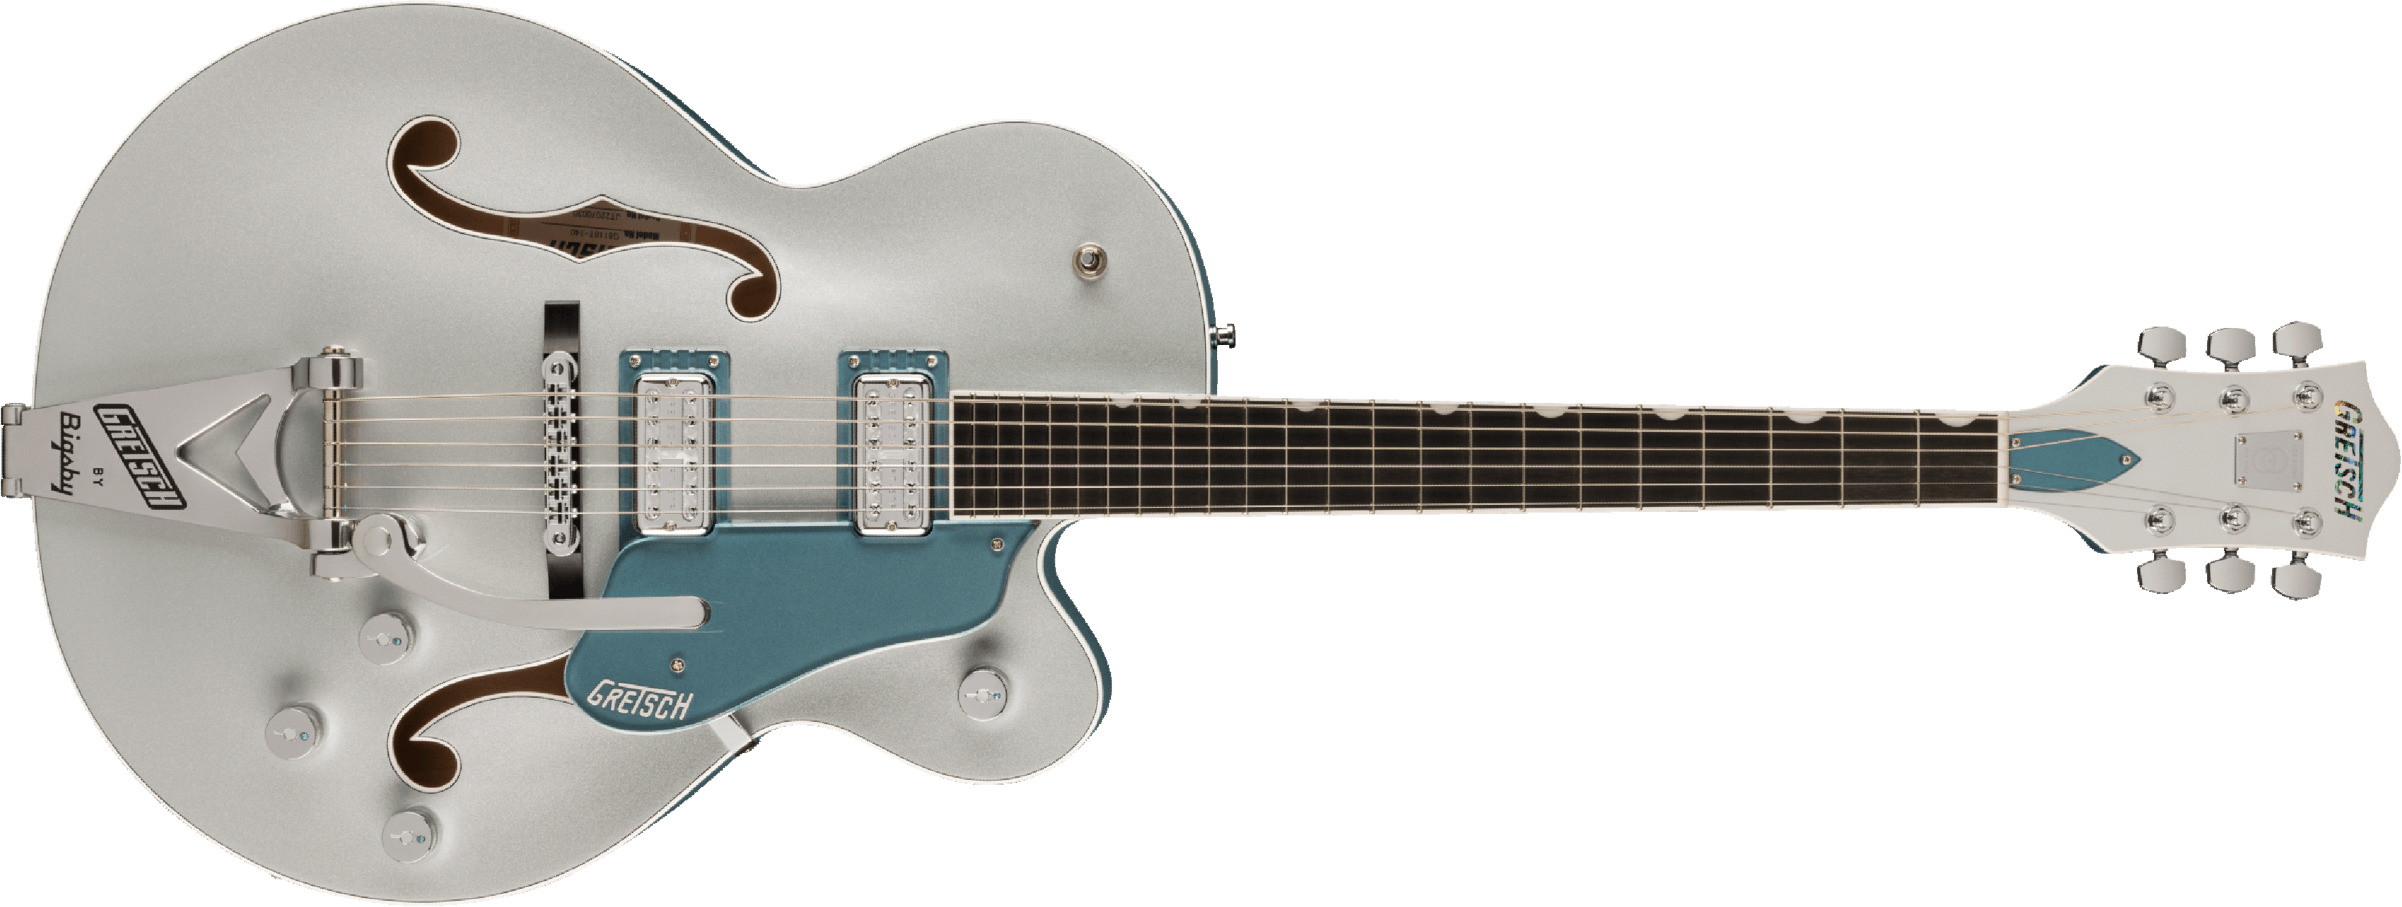 Gretsch G6118t-140 Ltd 140th Double-platinum Anniversary Eb - Two-tone Stone Platinum/pure Platinum - Semi-hollow electric guitar - Main picture